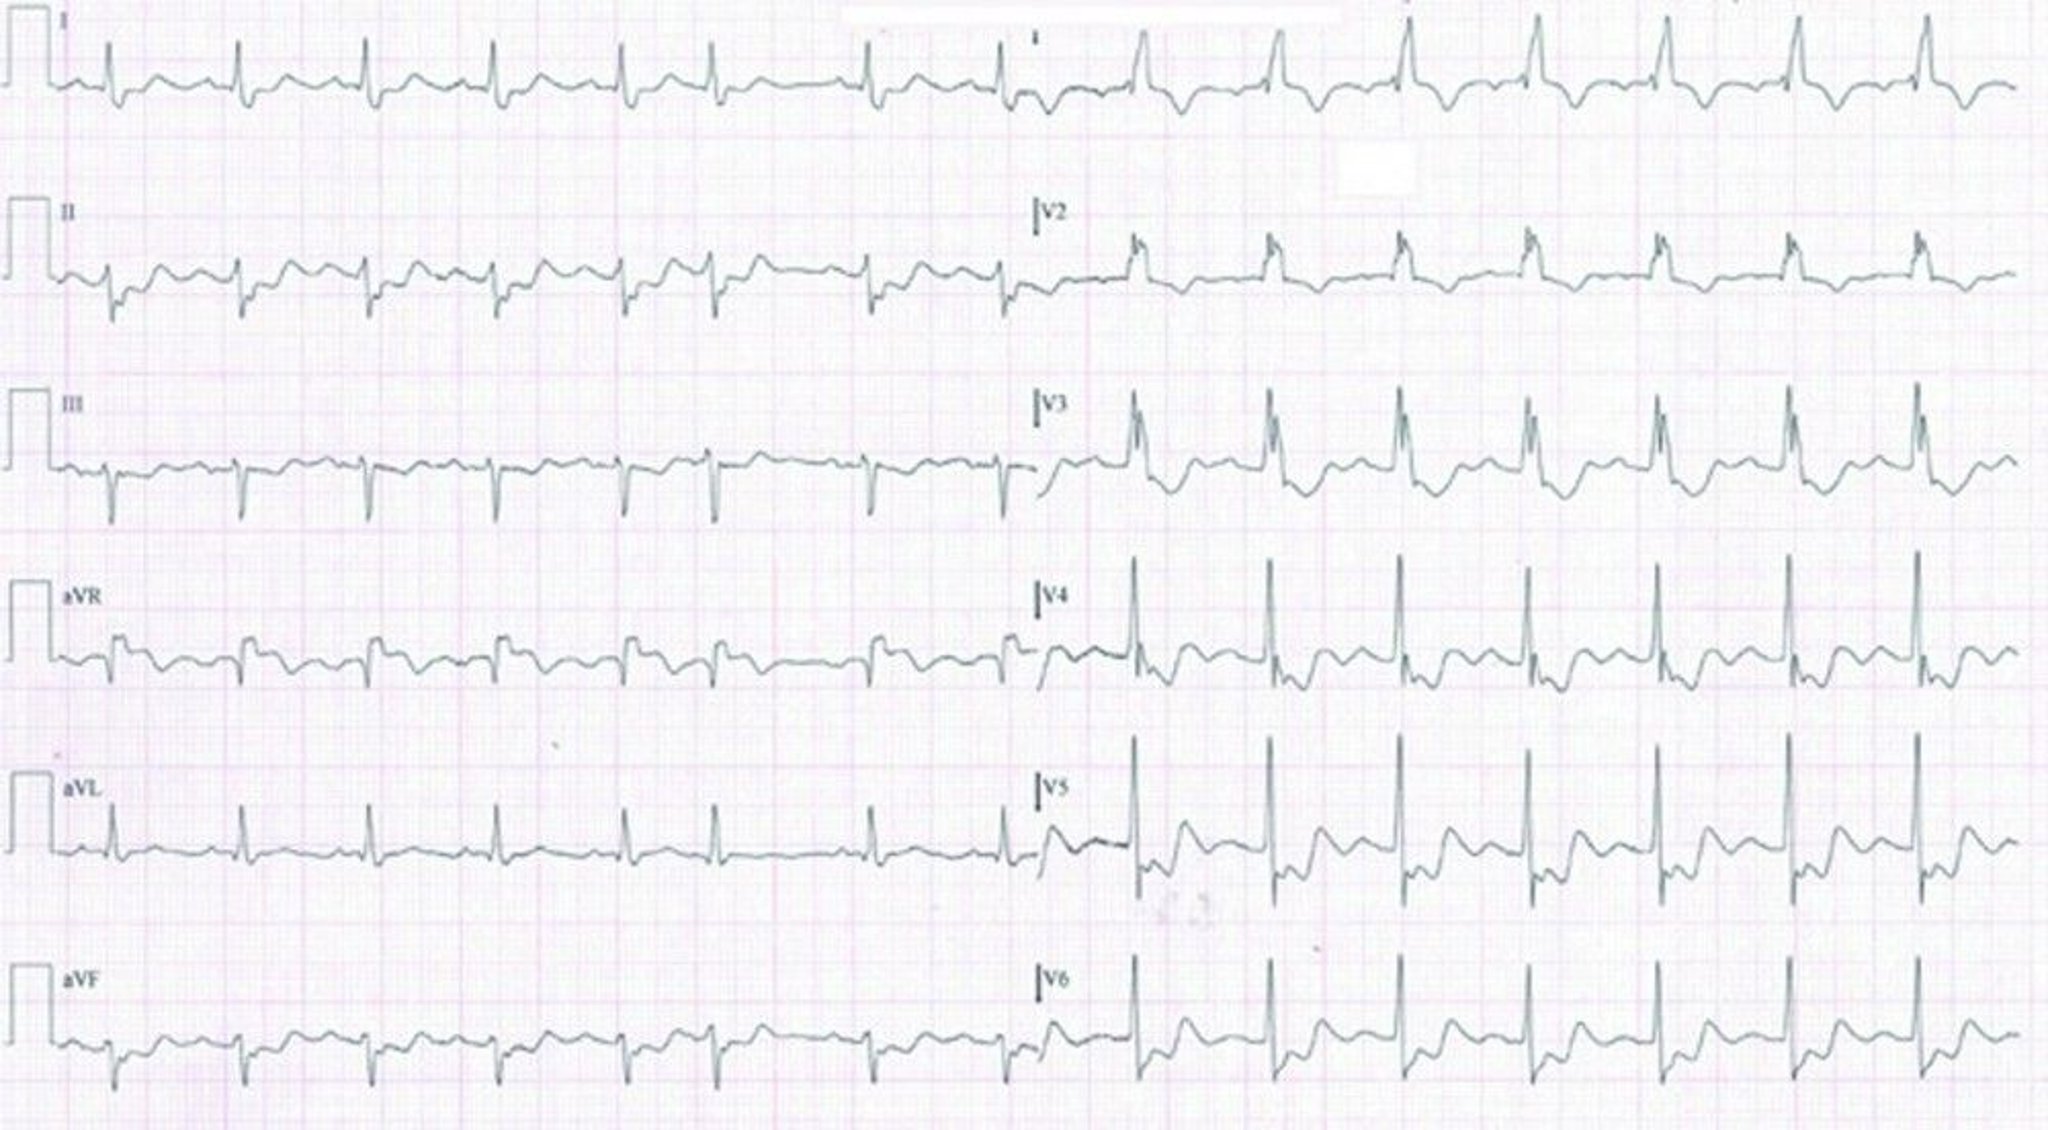 case study 1 acute myocardial infarction answers